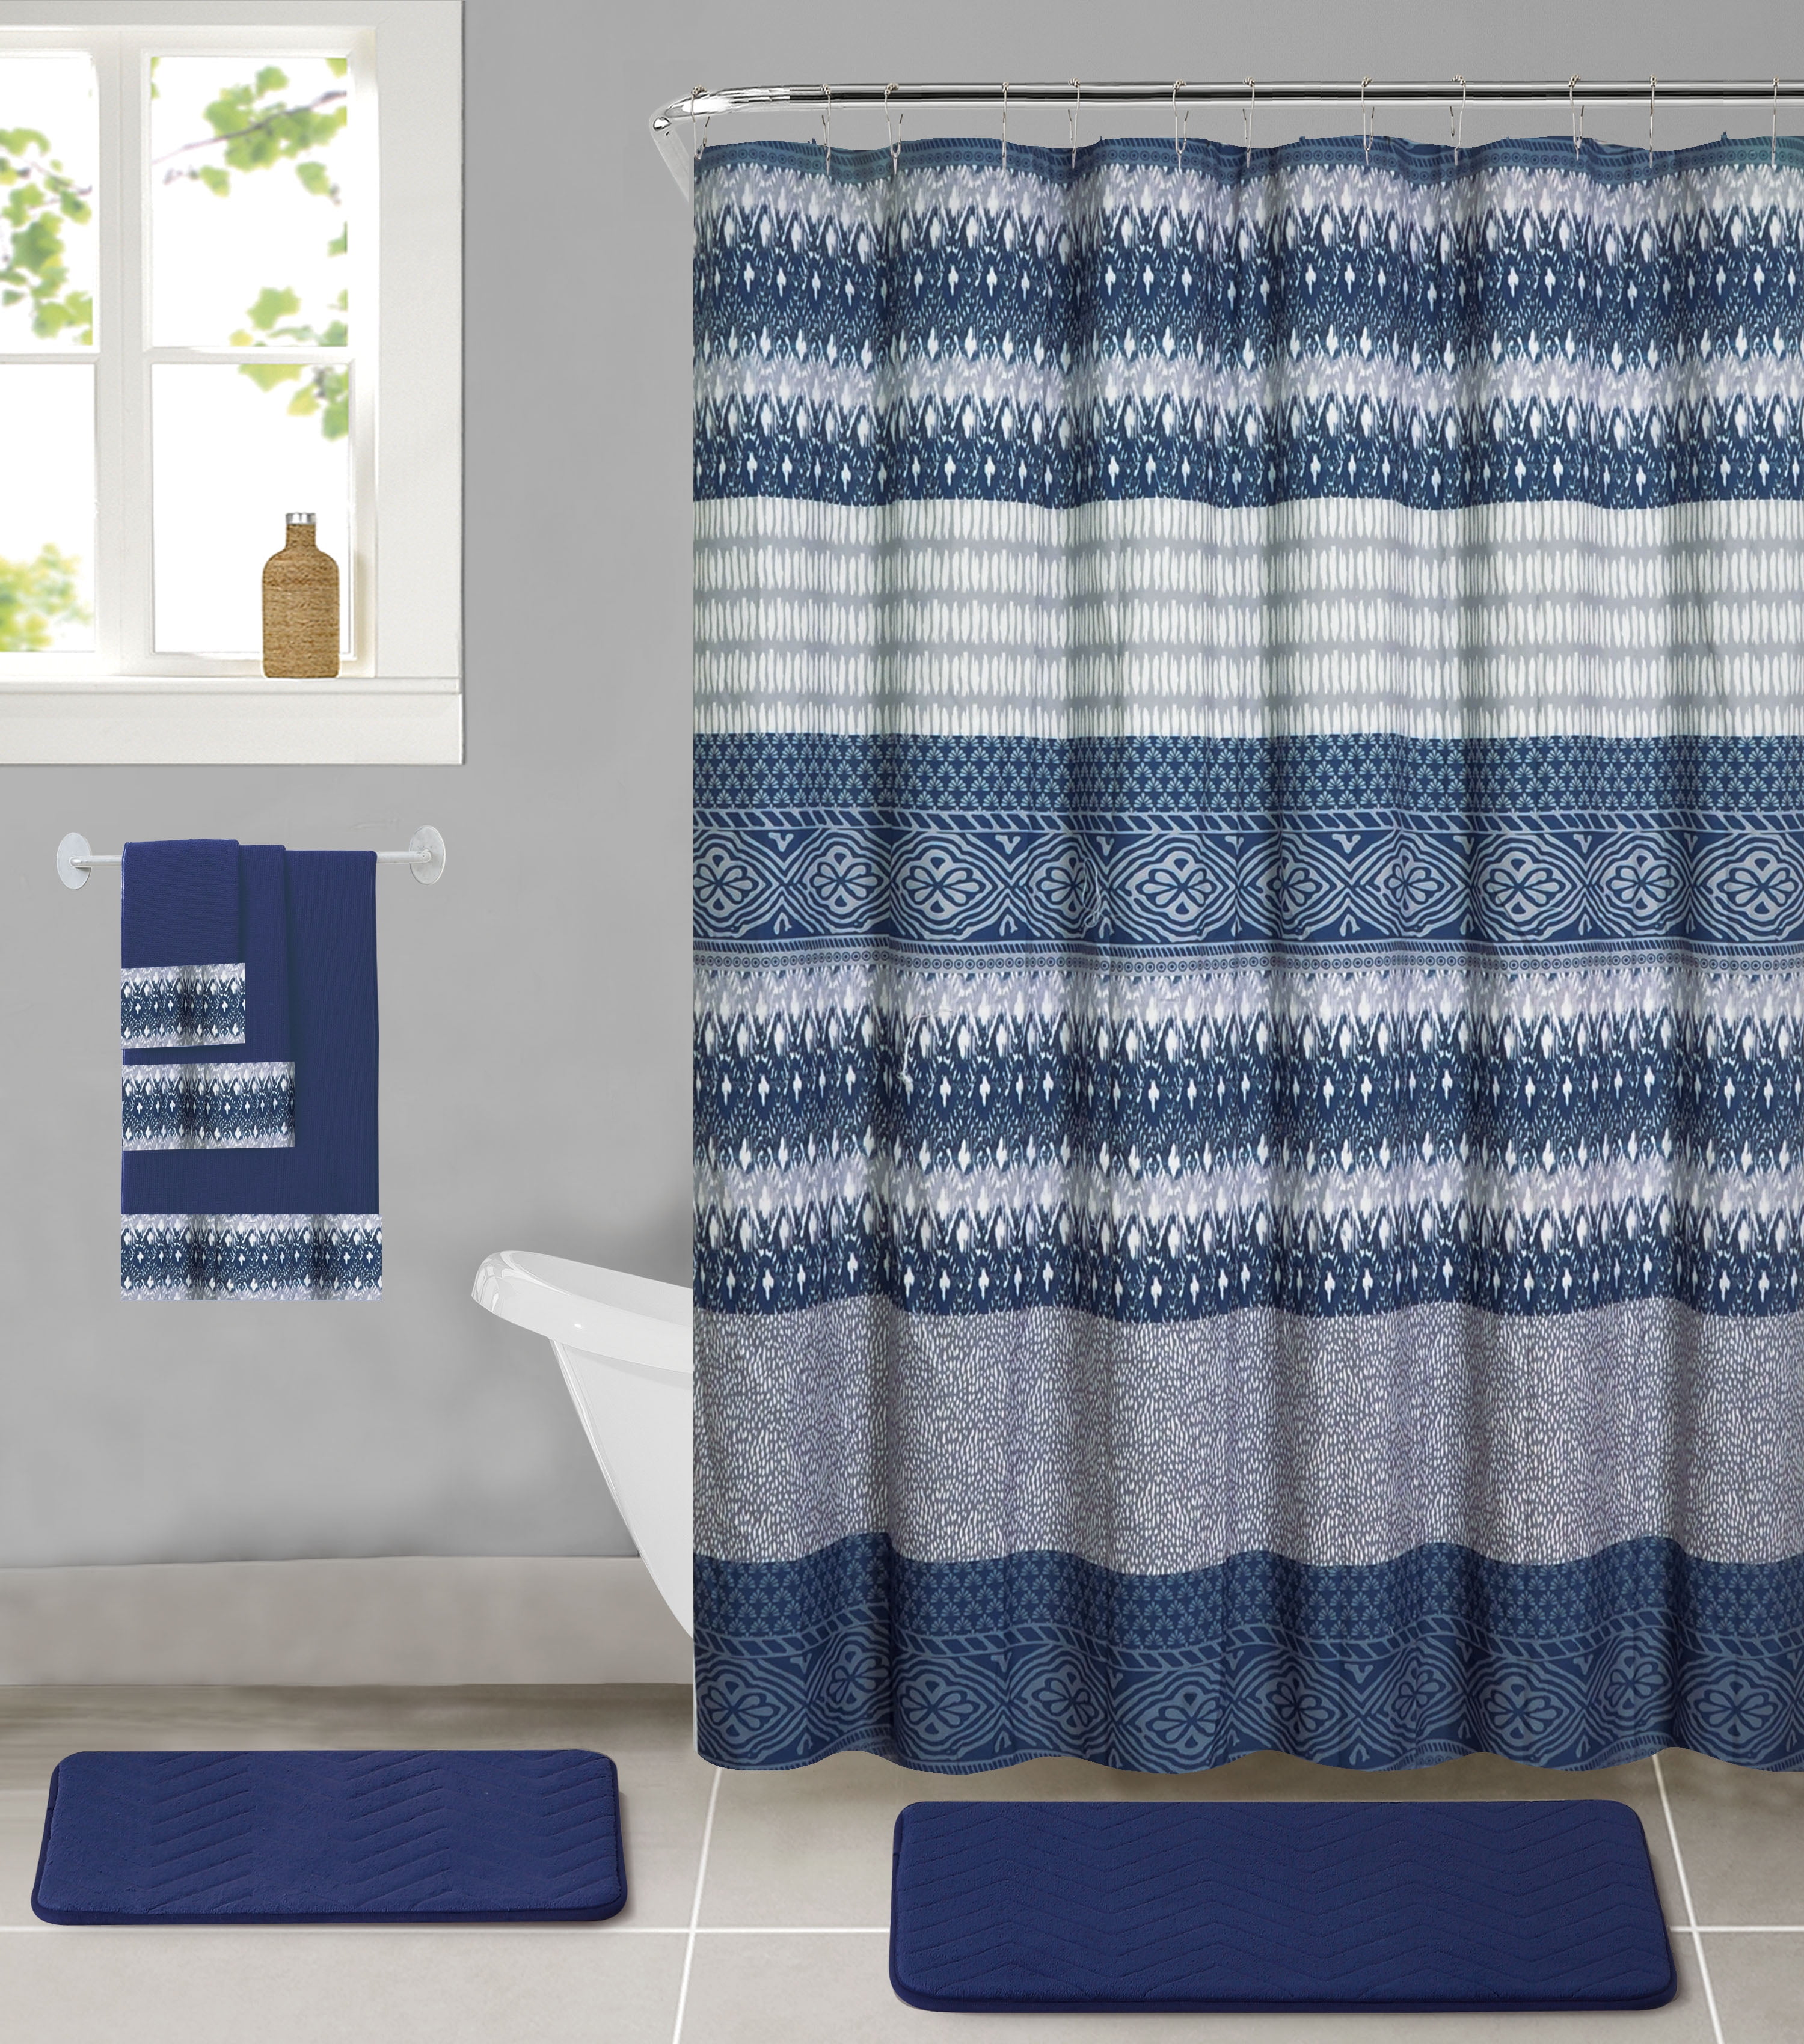 Details about   Floral Shower Curtain Set Thick Bathroom Rugs Bath Mat Non-Slip Toilet Lid Cover